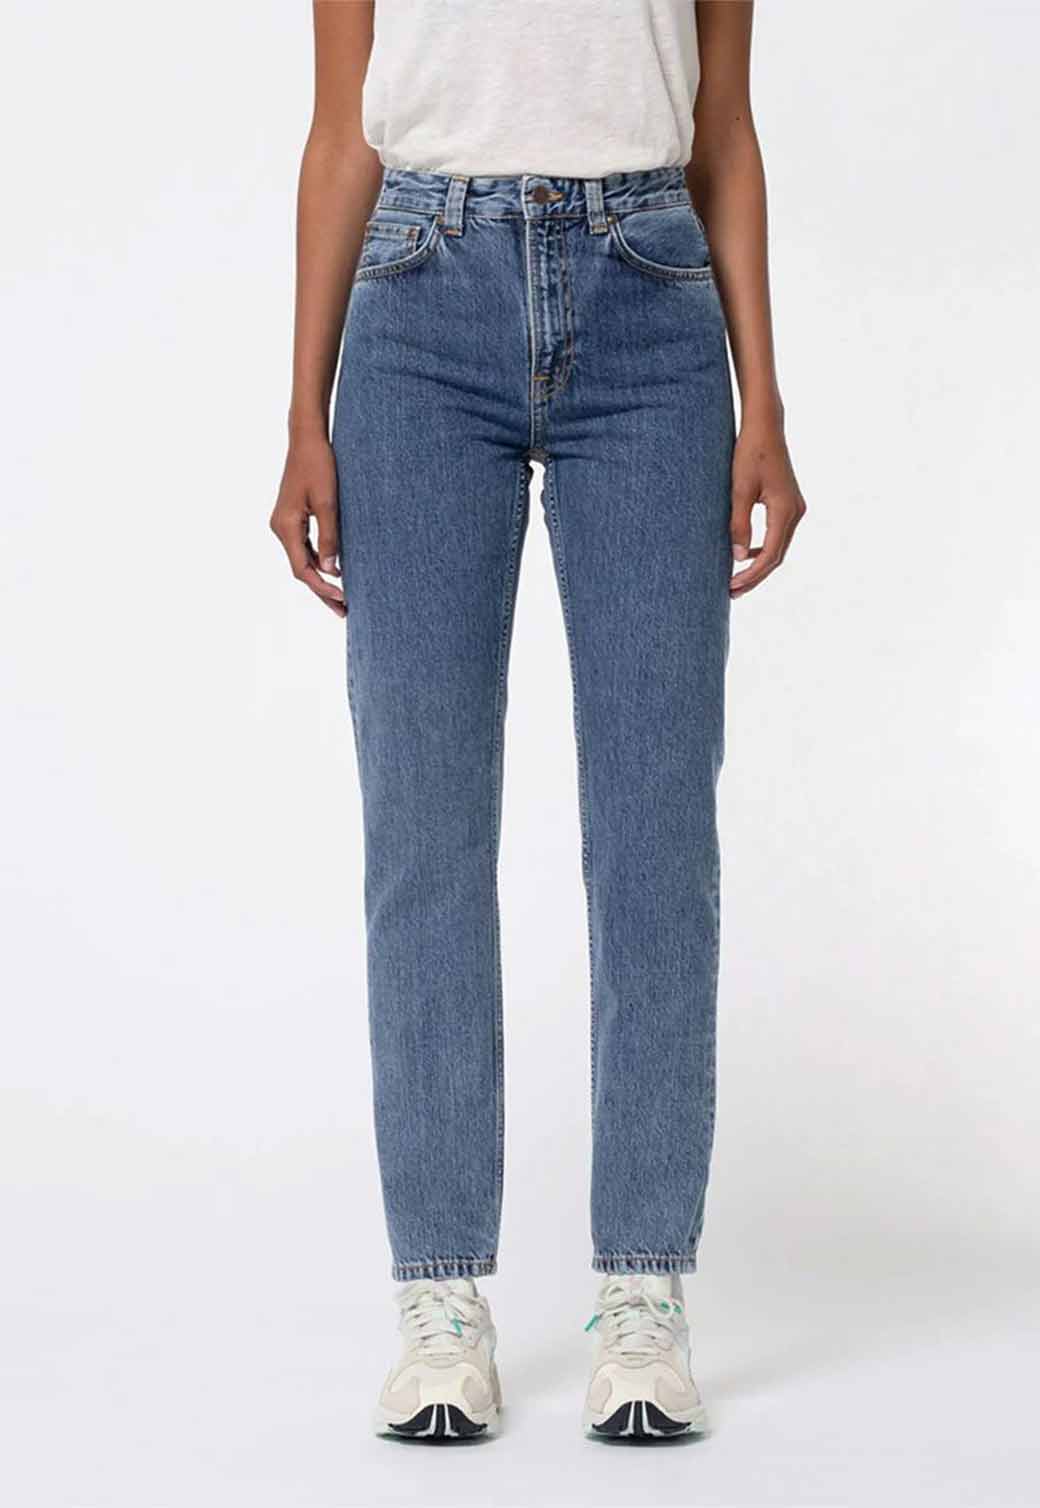 Dim Gray ג'ינס ארוך לנשים Breezy Britt - Friendly Blue NUDIE